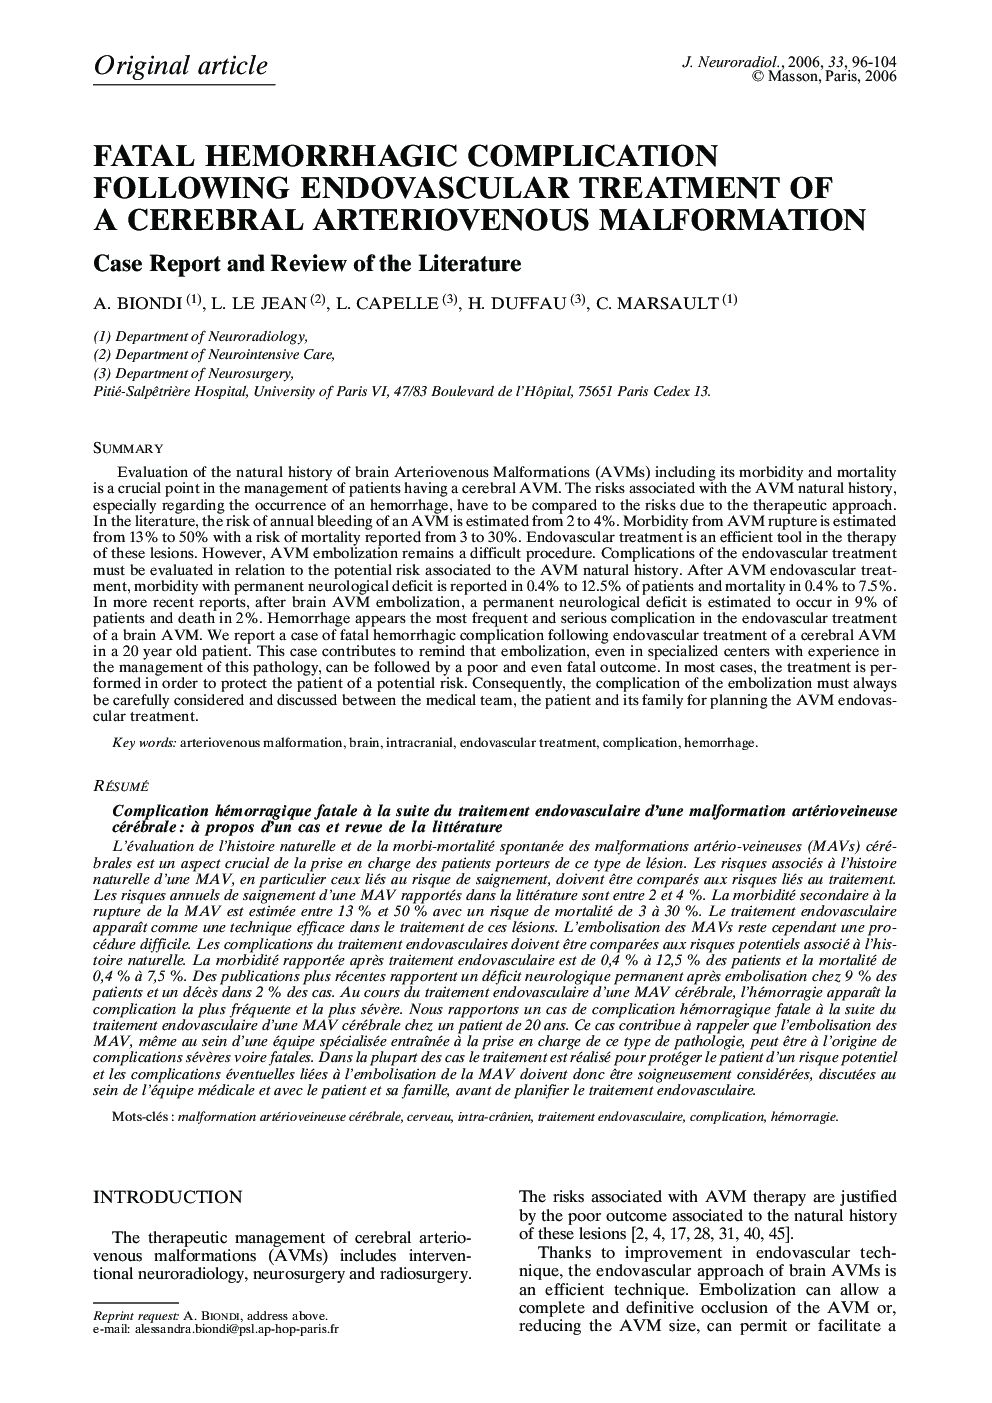 Fatal hemorrhagic complication following endovascular treatment of a cerebral arteriovenous malformation